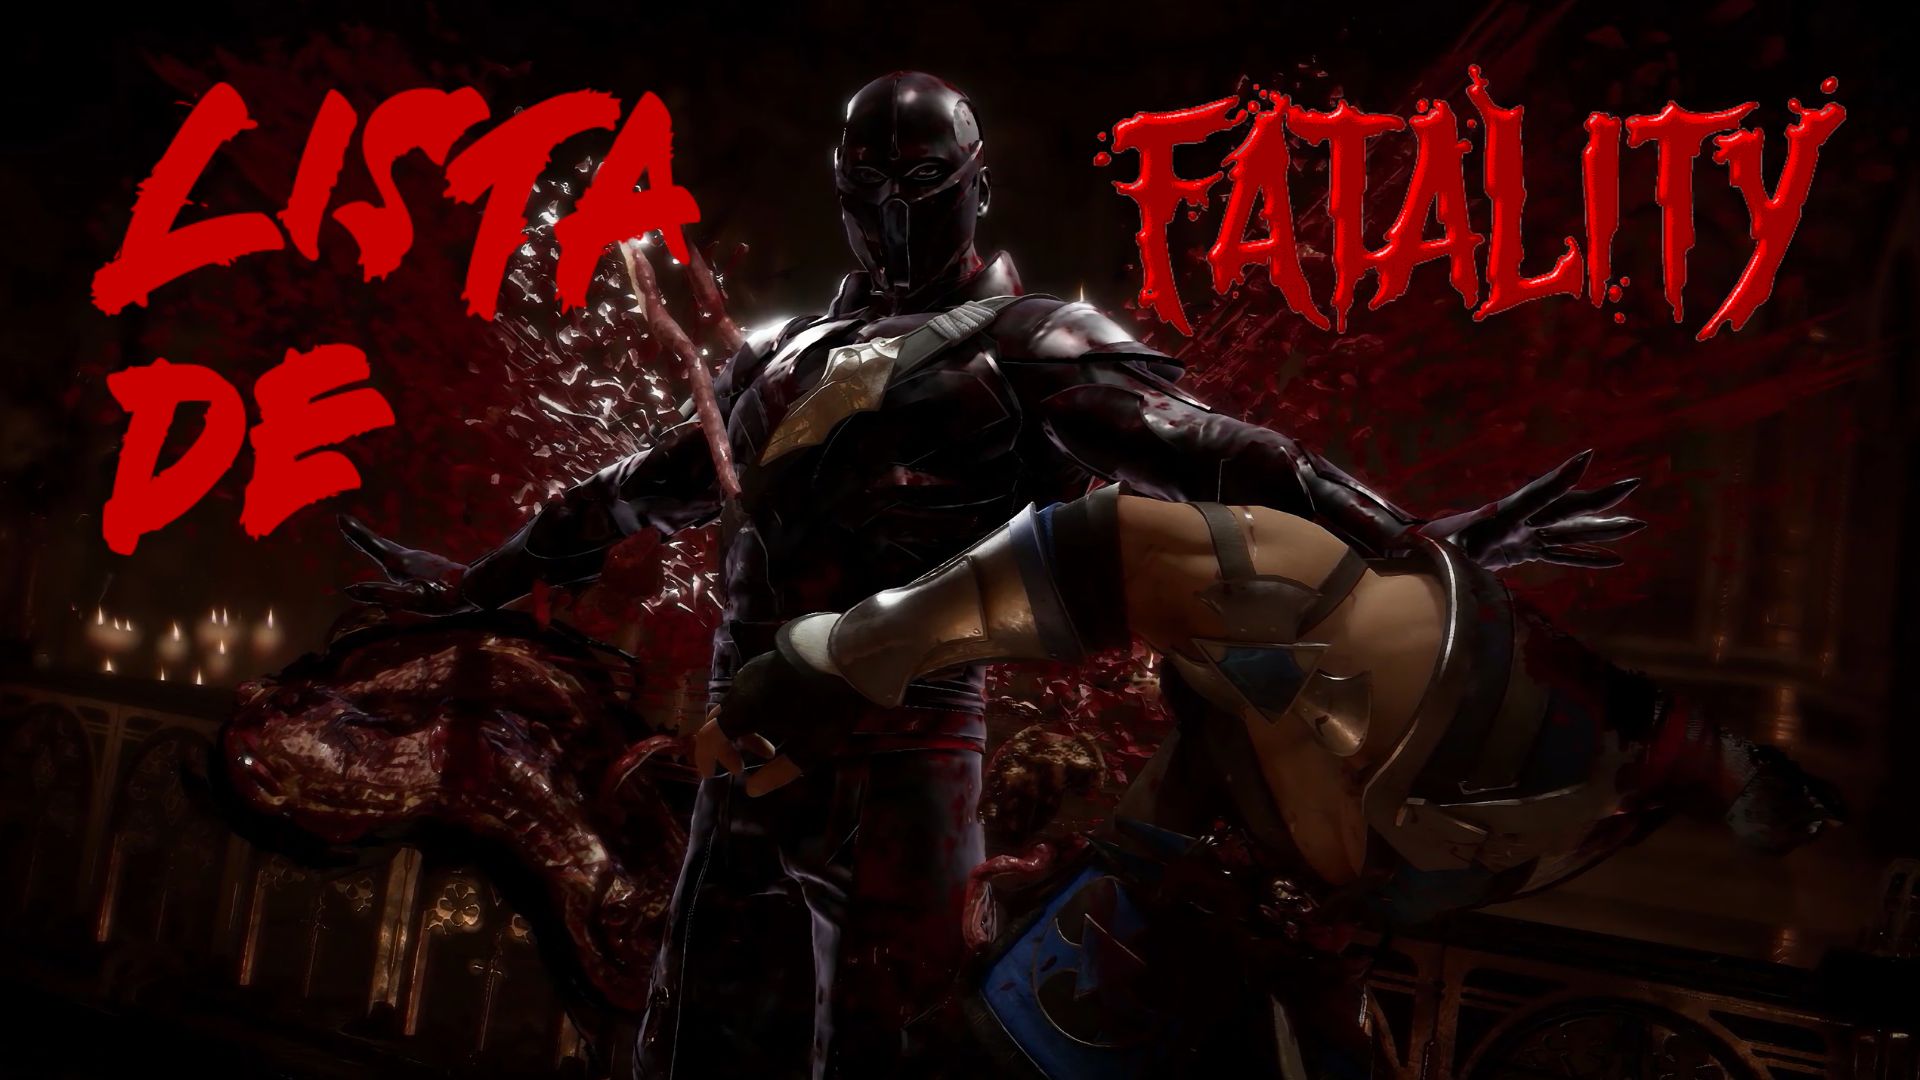 Mortal Kombat 11 - Como executar Fatalities, Lista de Comandos